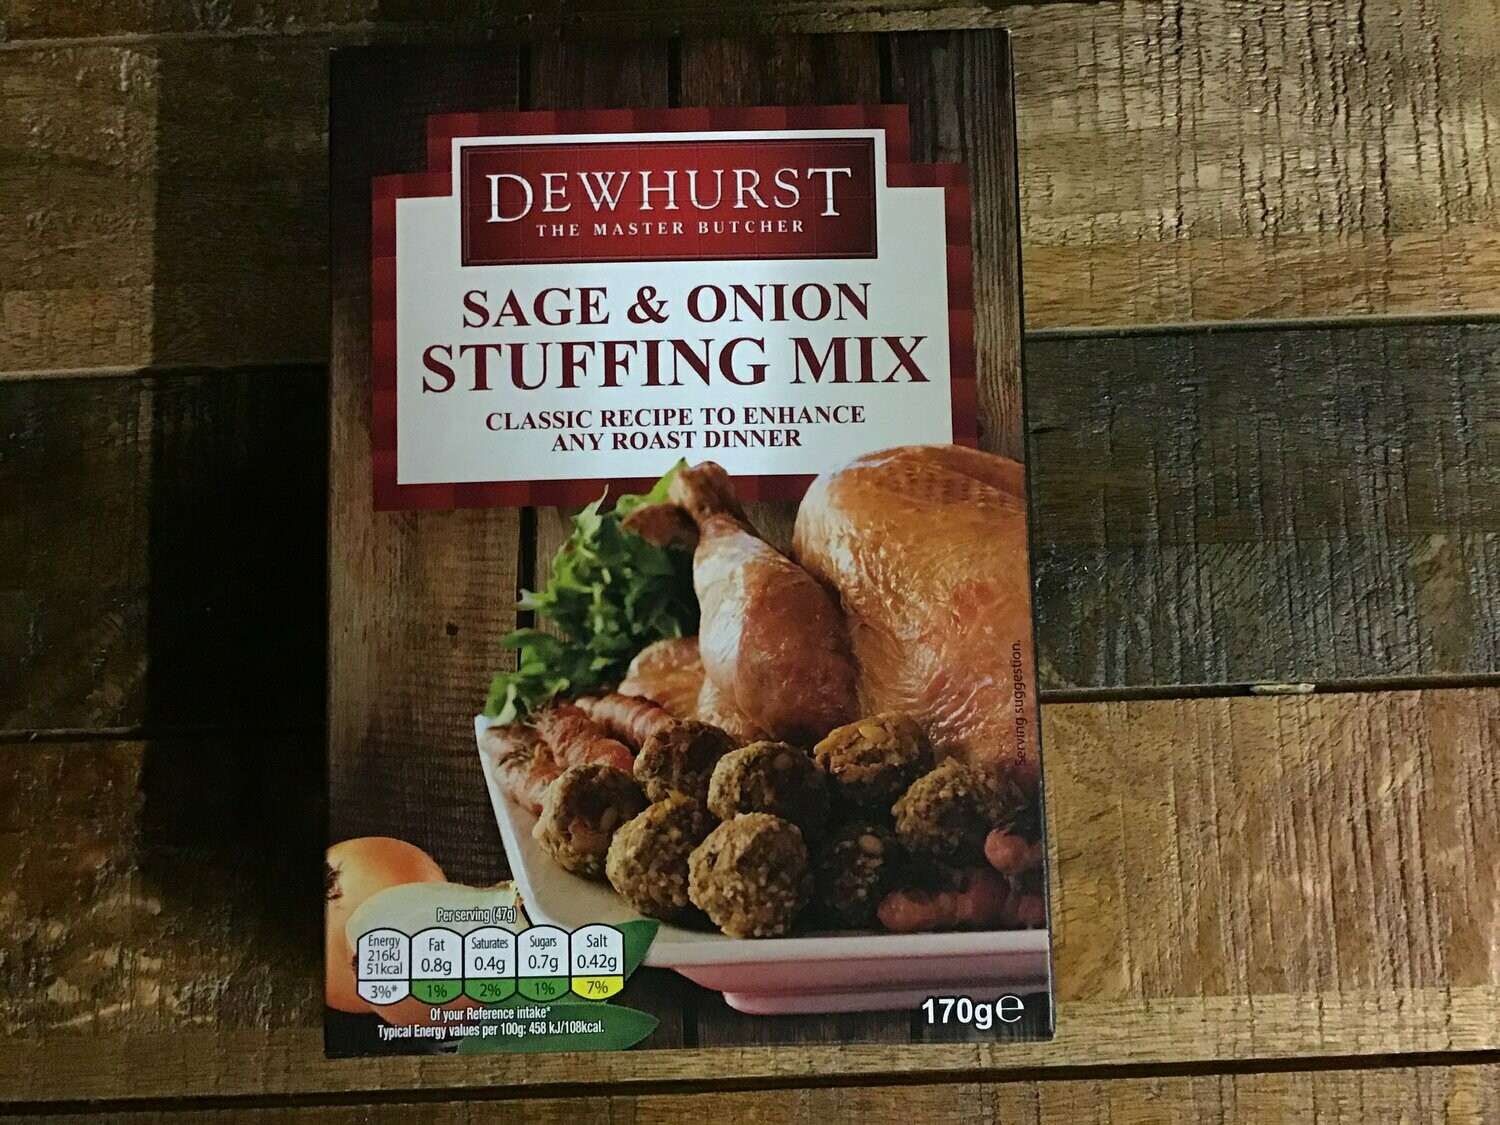 Dewhurst Sage & Onion Stuffing Mix 170g